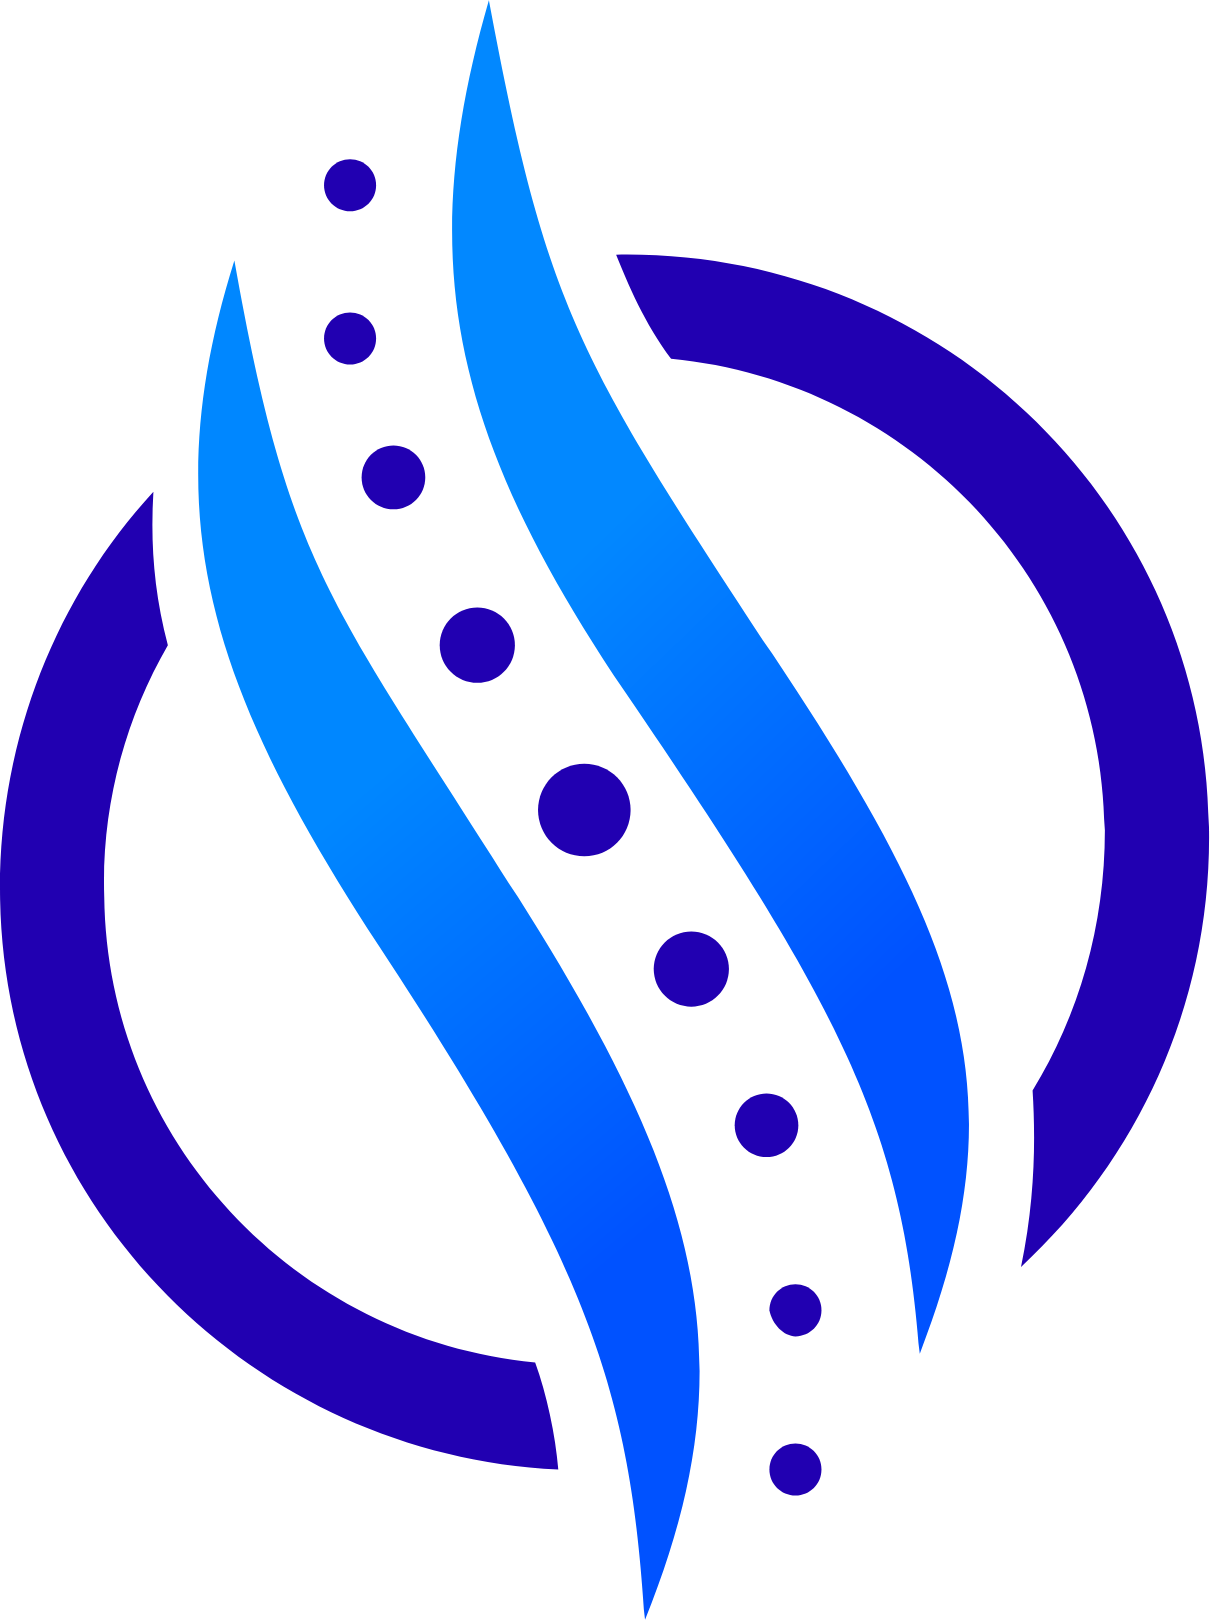 Telix Pharmaceuticals logo (PNG transparent)